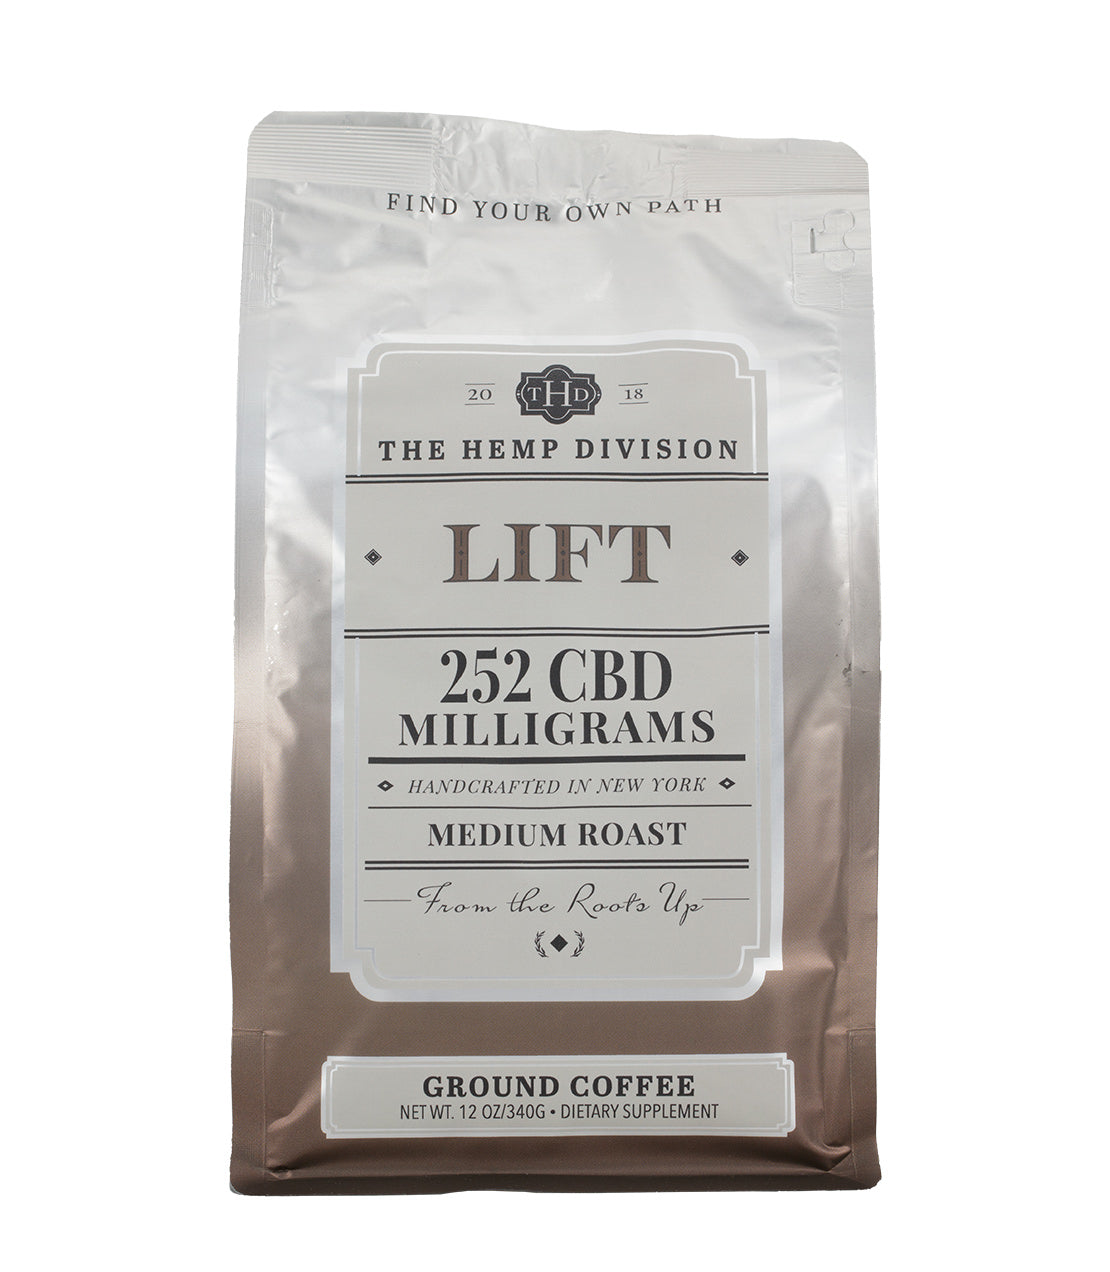 THD Lift Ground Coffee - 252 MG CBD - Loose 12 oz. Bag - Harney & Sons Fine Teas